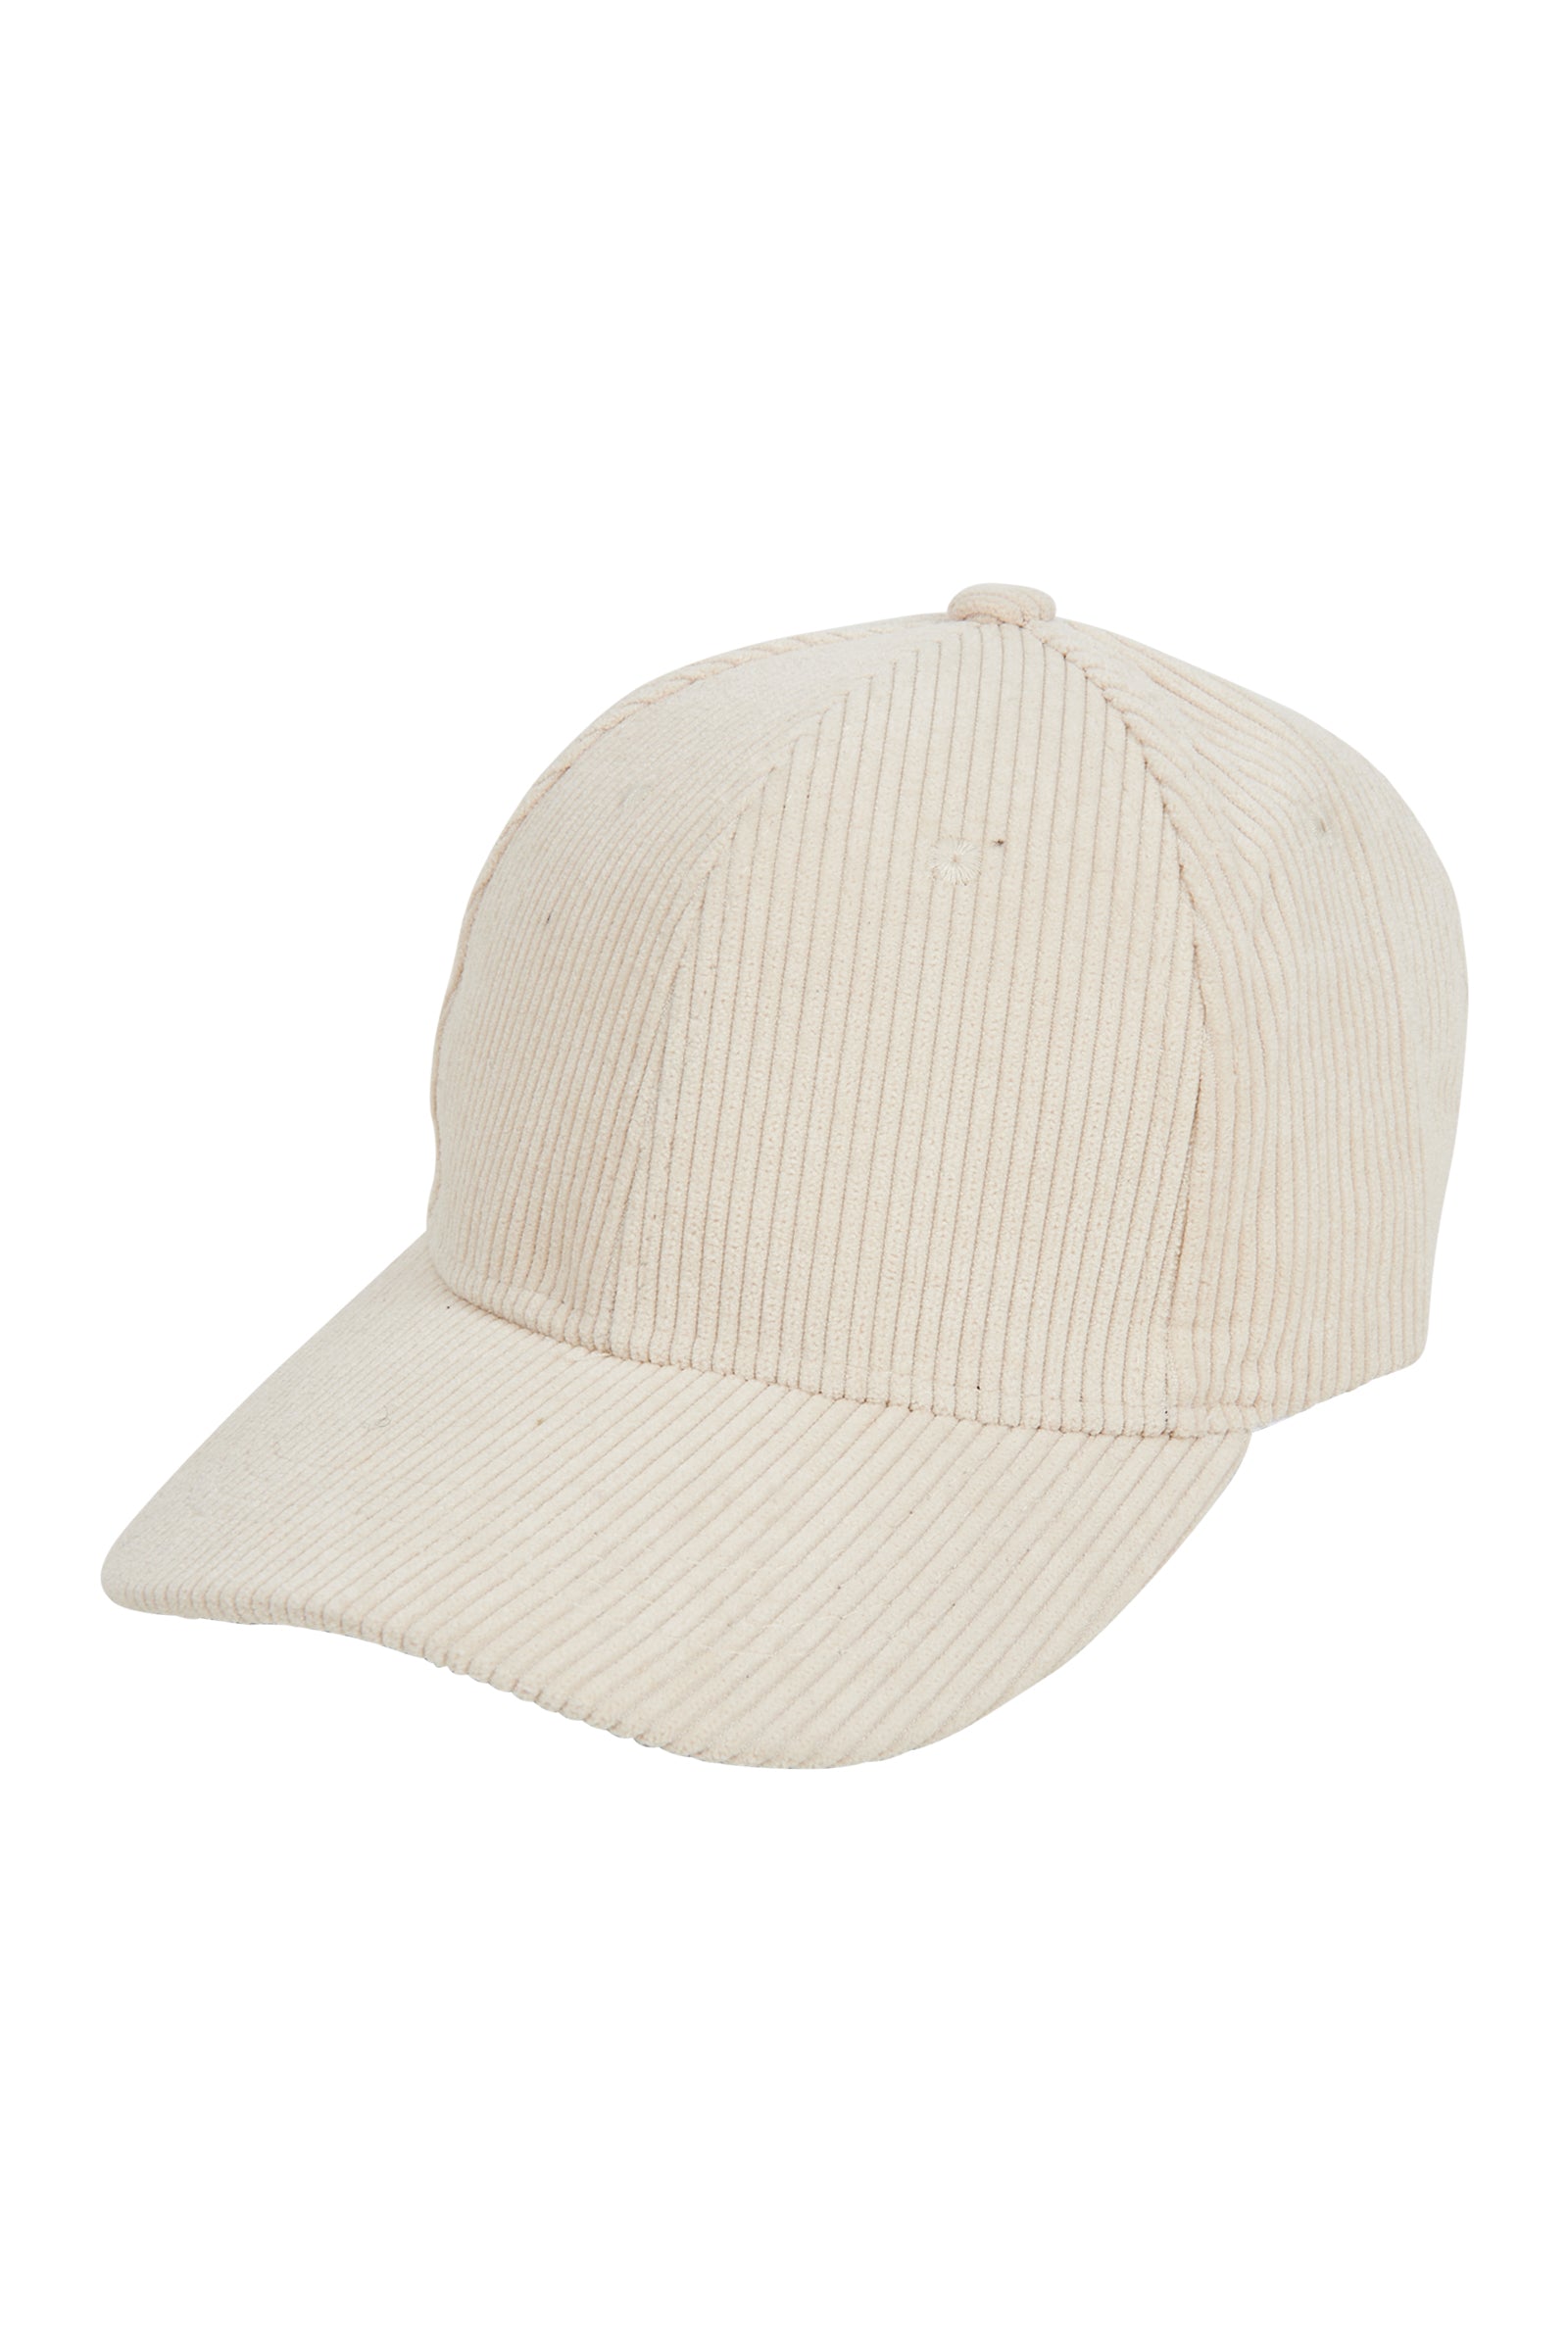 Paarl Cap - Vanilla - eb&ive Hat